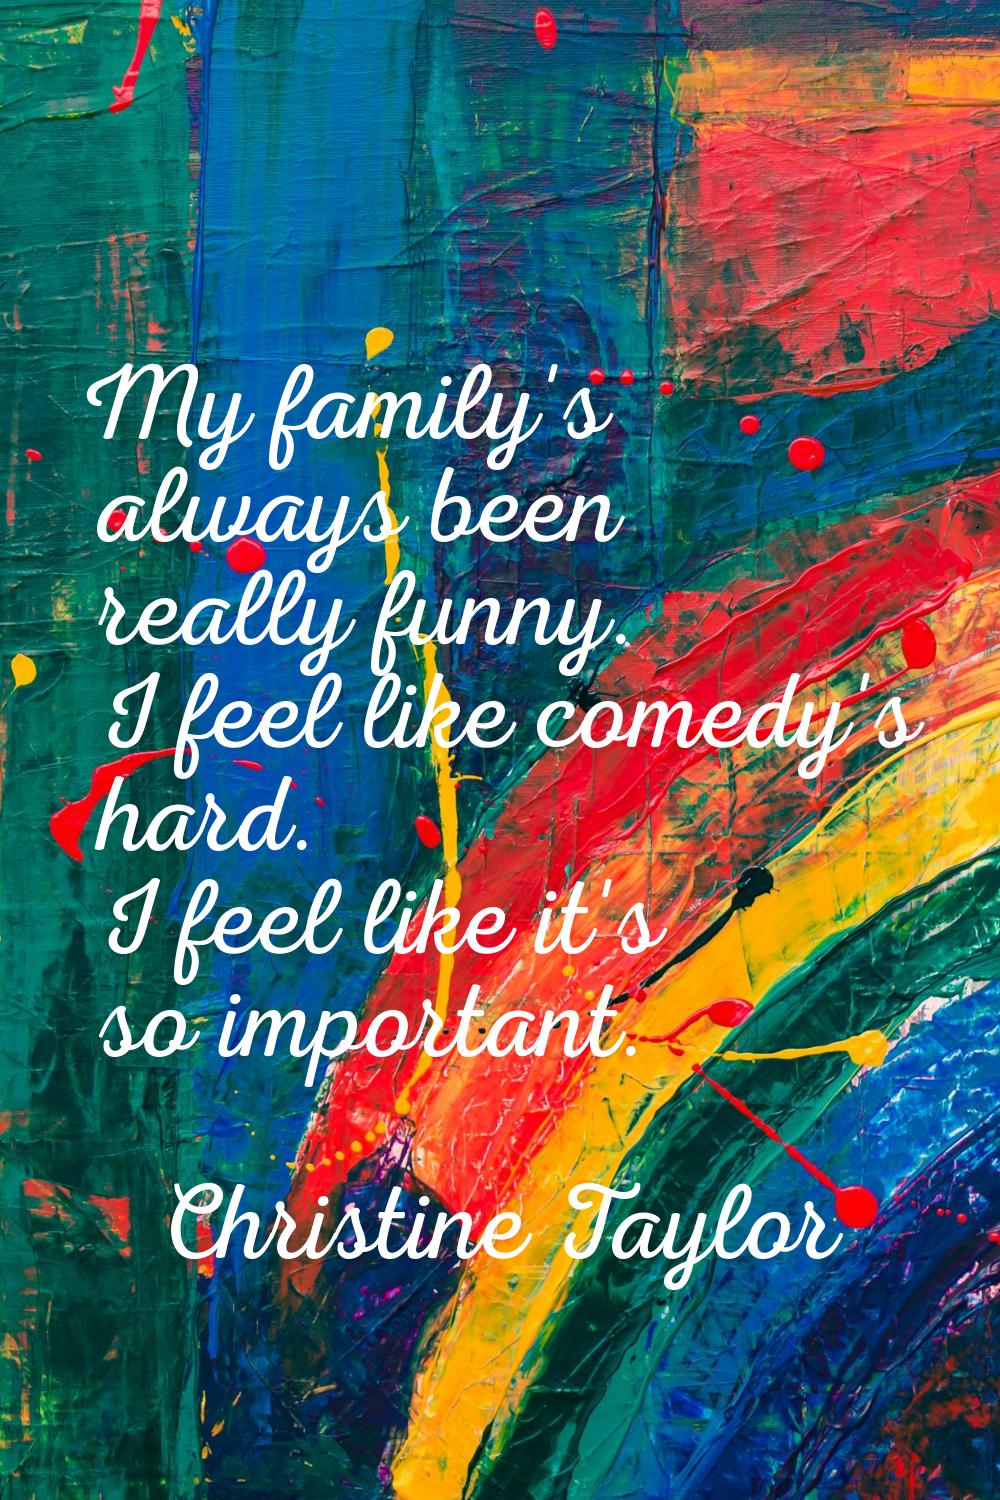 My family's always been really funny. I feel like comedy's hard. I feel like it's so important.